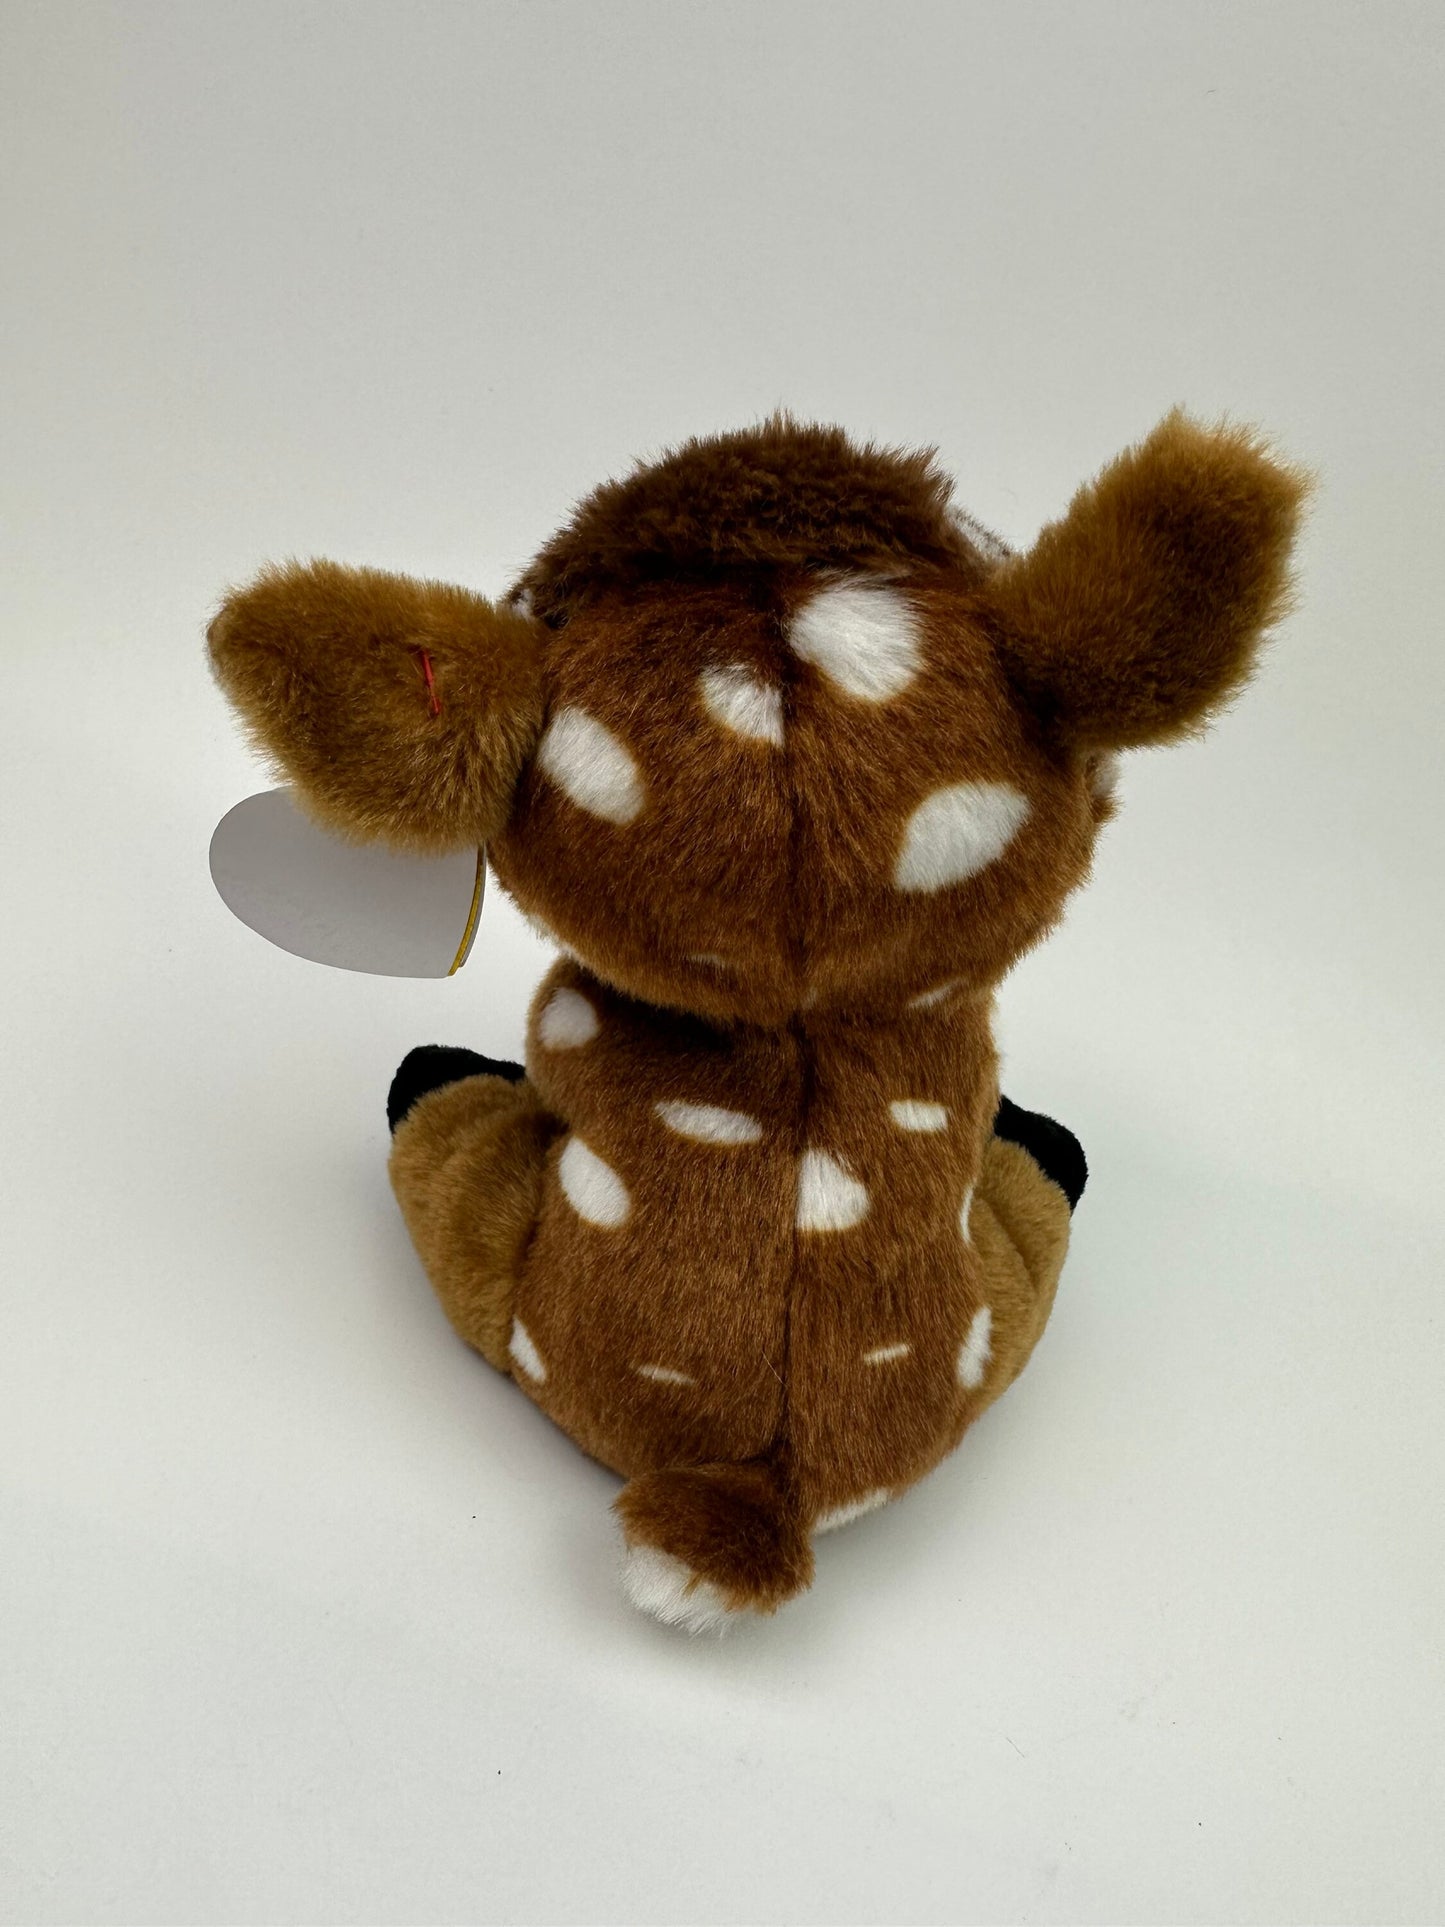 Ty Beanie Baby “Buckley” the Deer! (6.5 inch)